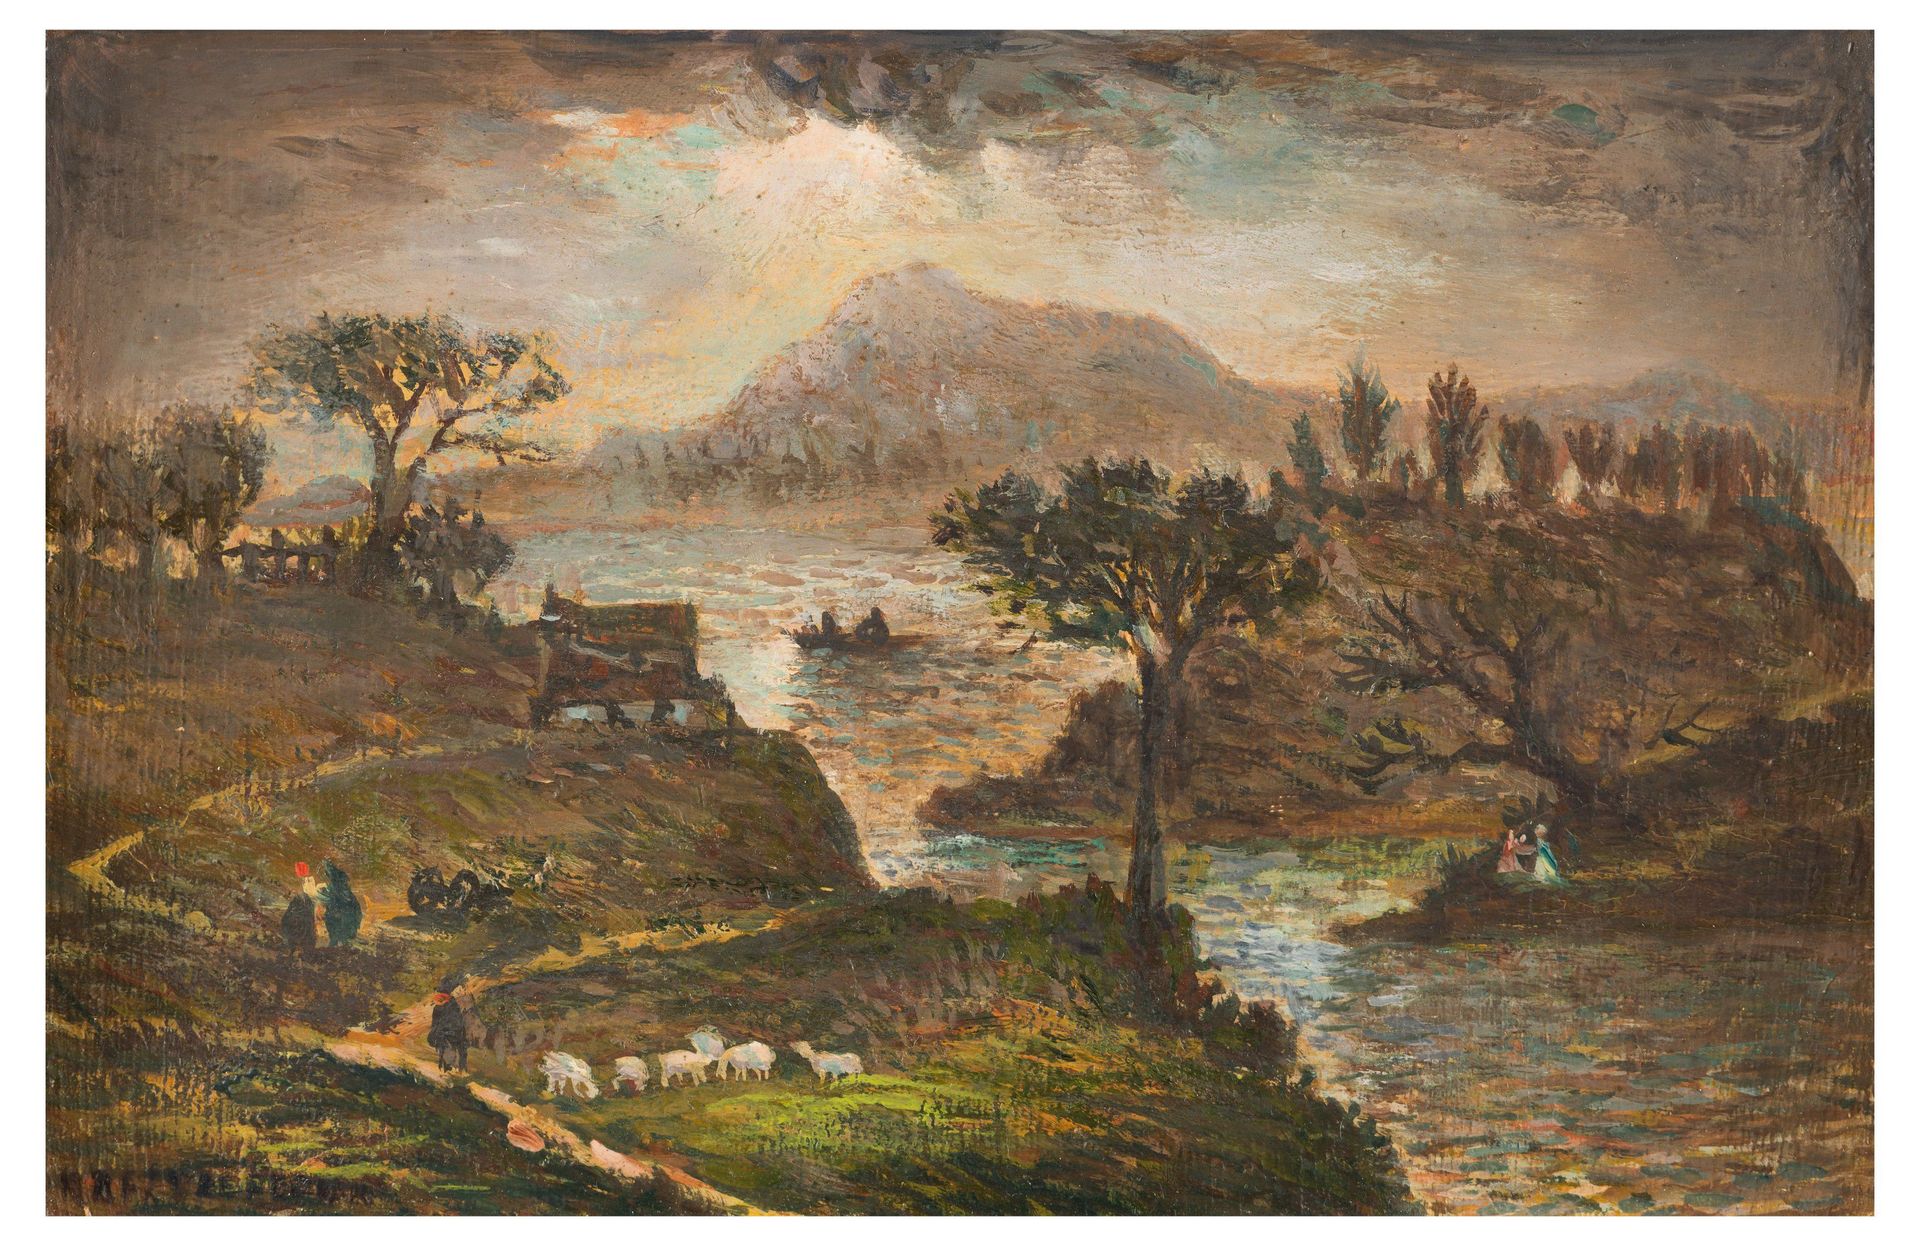 Null 让-拉菲-勒-佩尔桑 (1920 - 2008)

湖边的牧羊人

板面油画，左下角有签名

14 x 22 cm